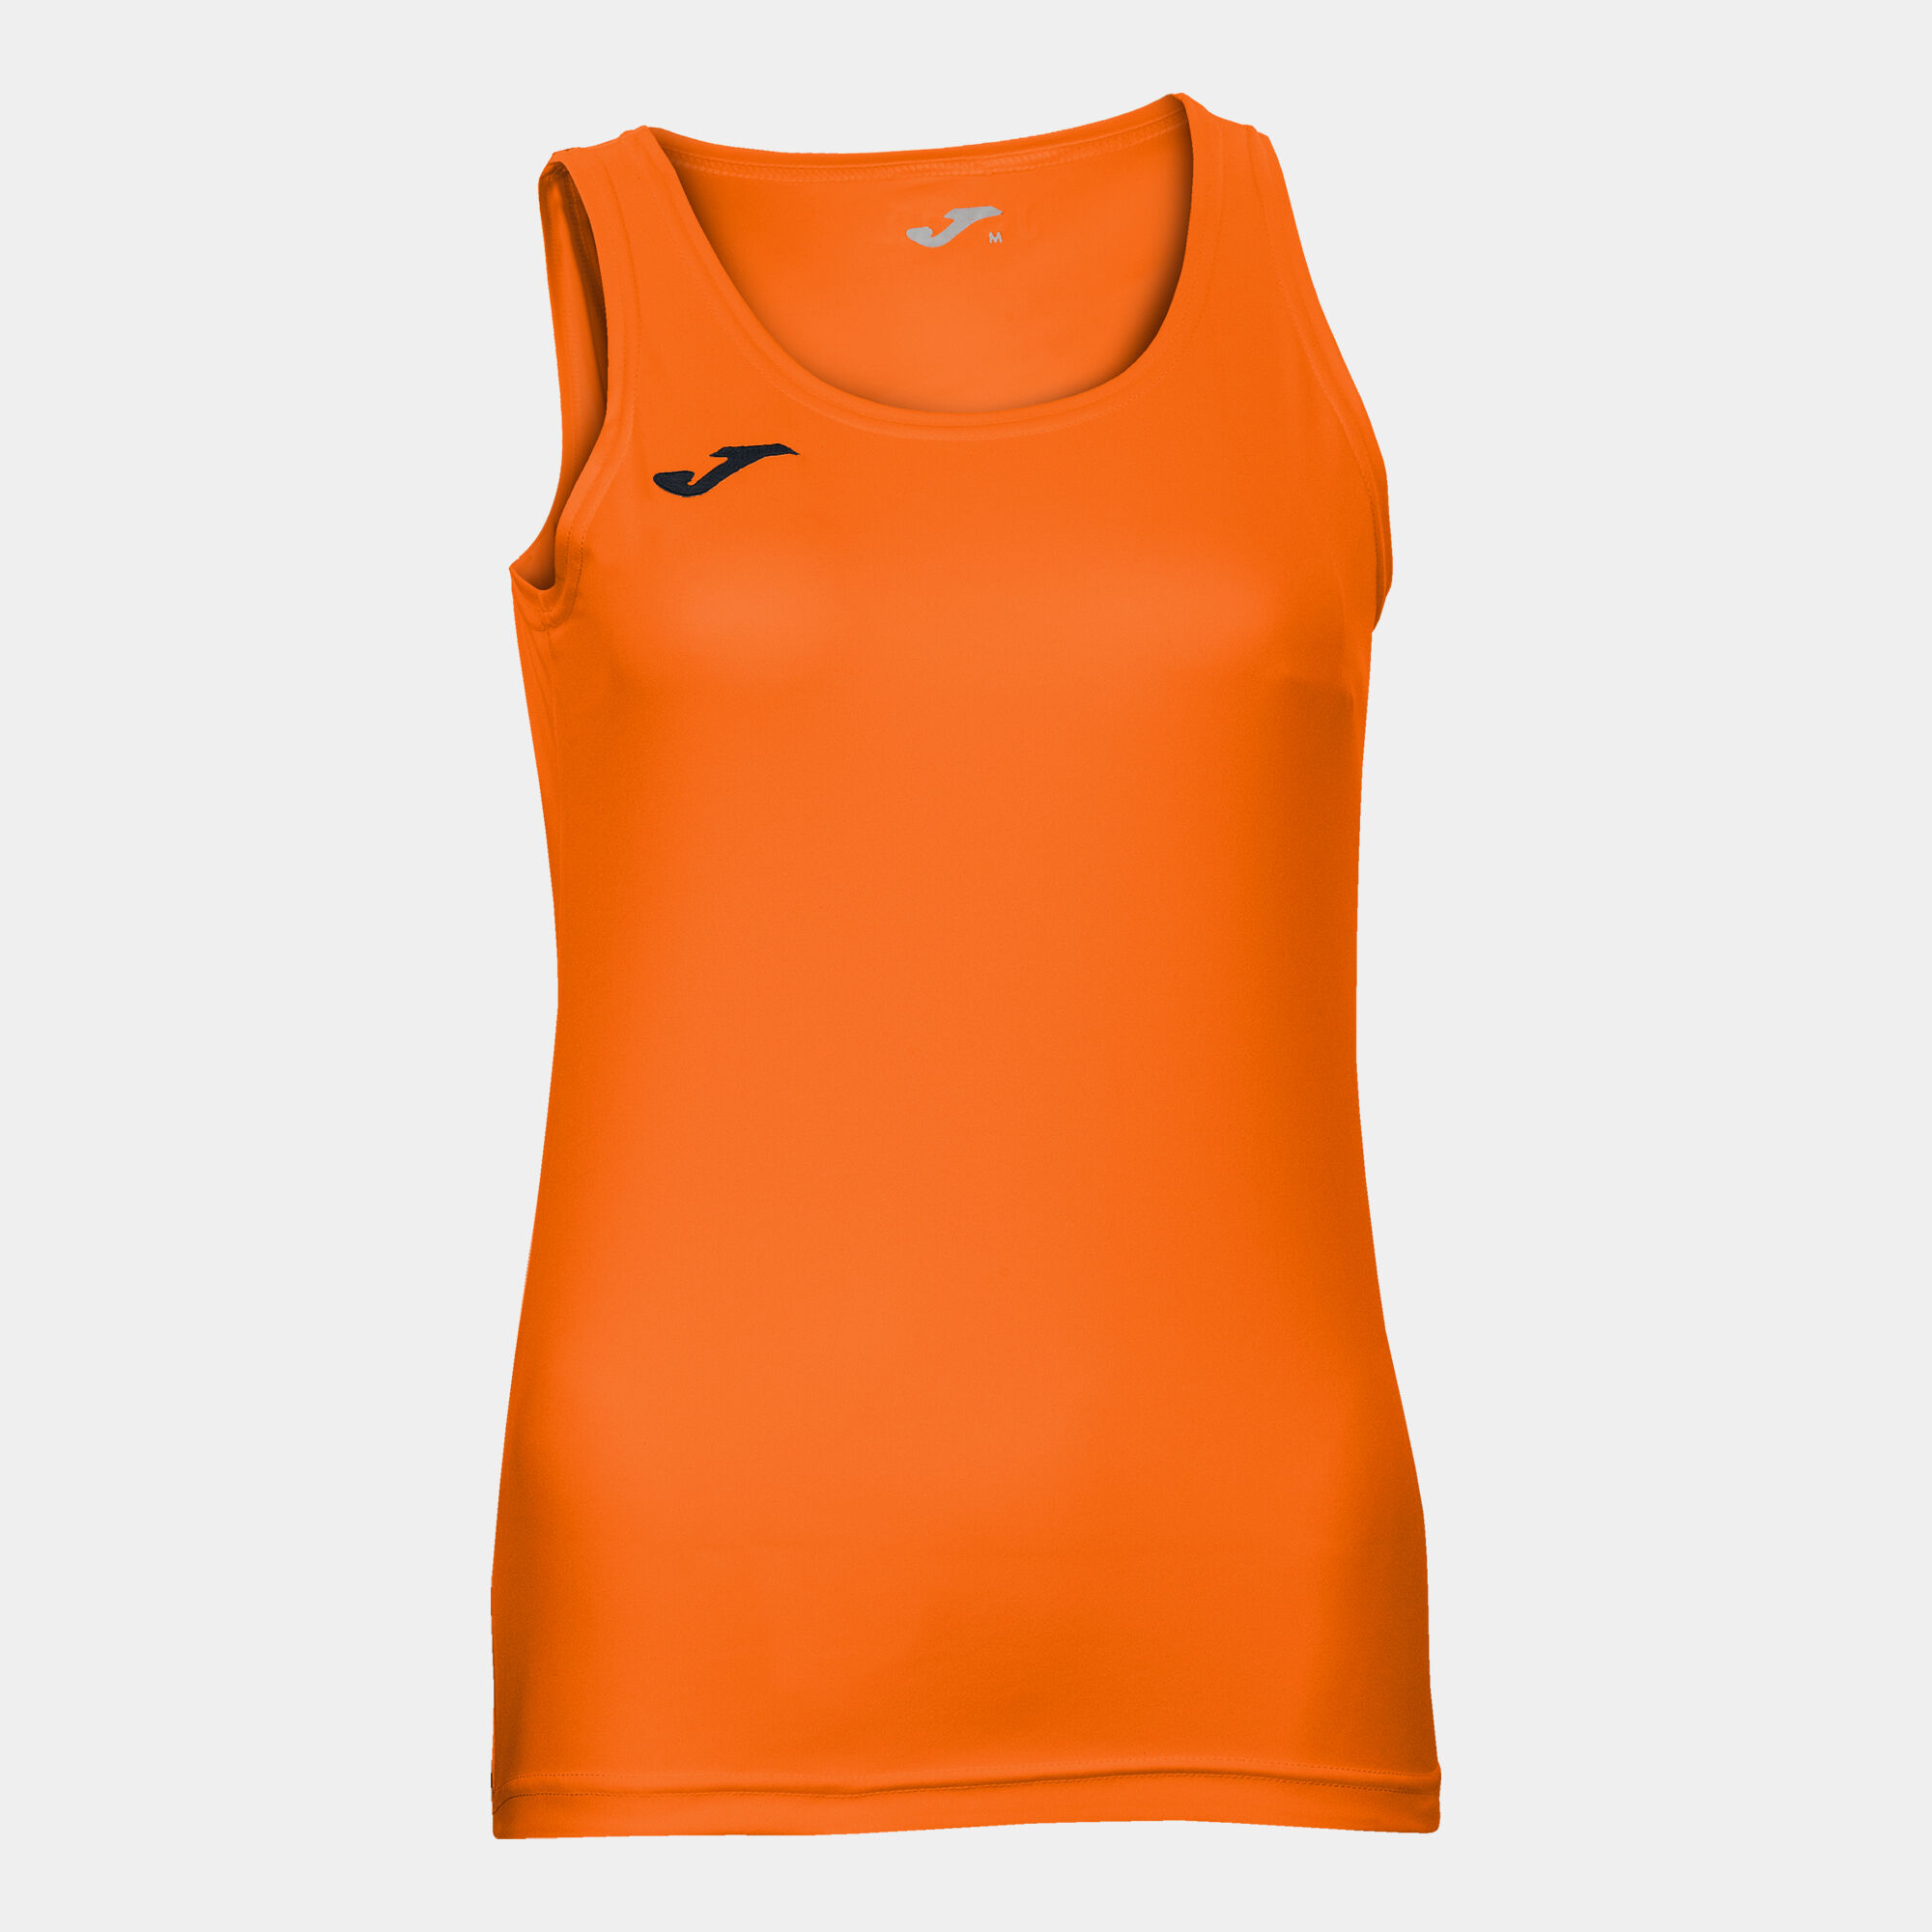 Camiseta sin mangas mujer Diana naranja